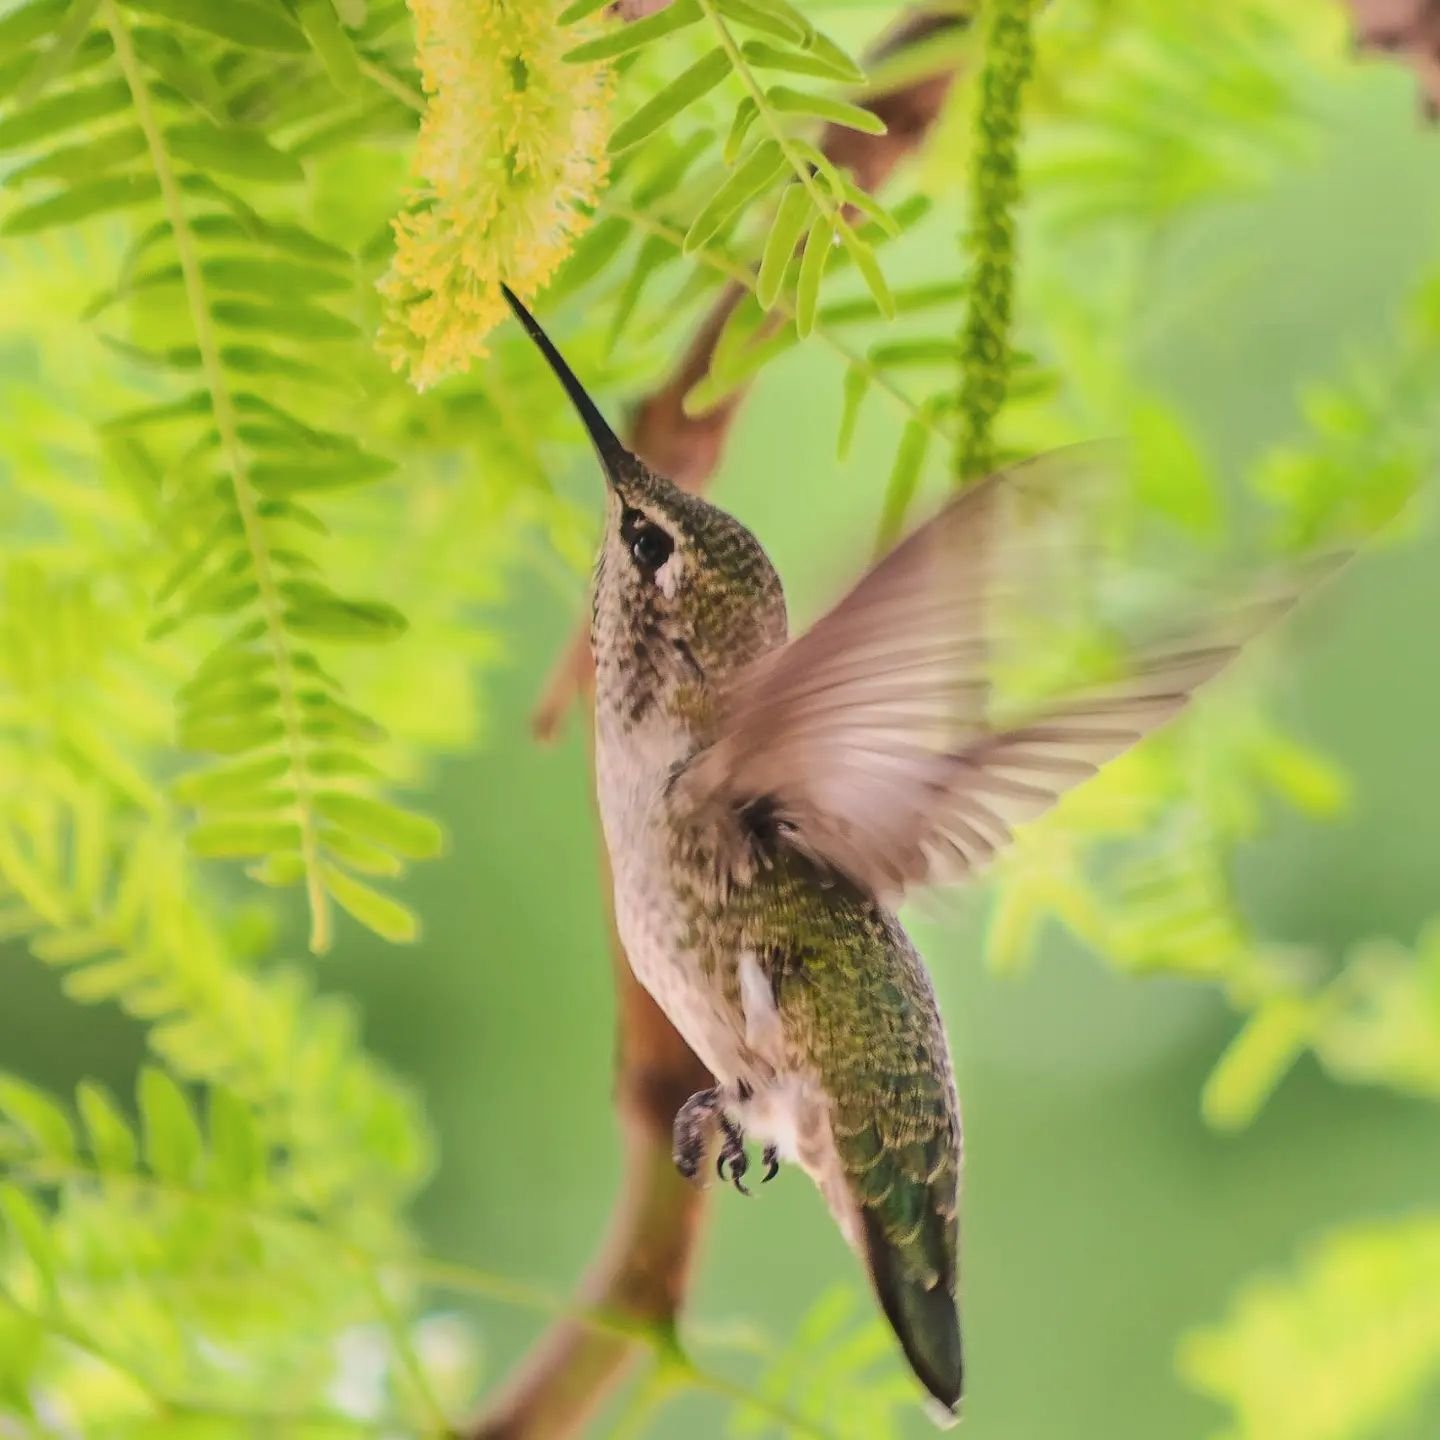 #annashummingbird #hummingbird #birdphotography #birdsinflight #birdlovers #pentax_us #pentaxk1 #300mm #closeup #arizona #wildlife #wildlifephotography #arizonalife #hummingbirds #nationalphotographymonth